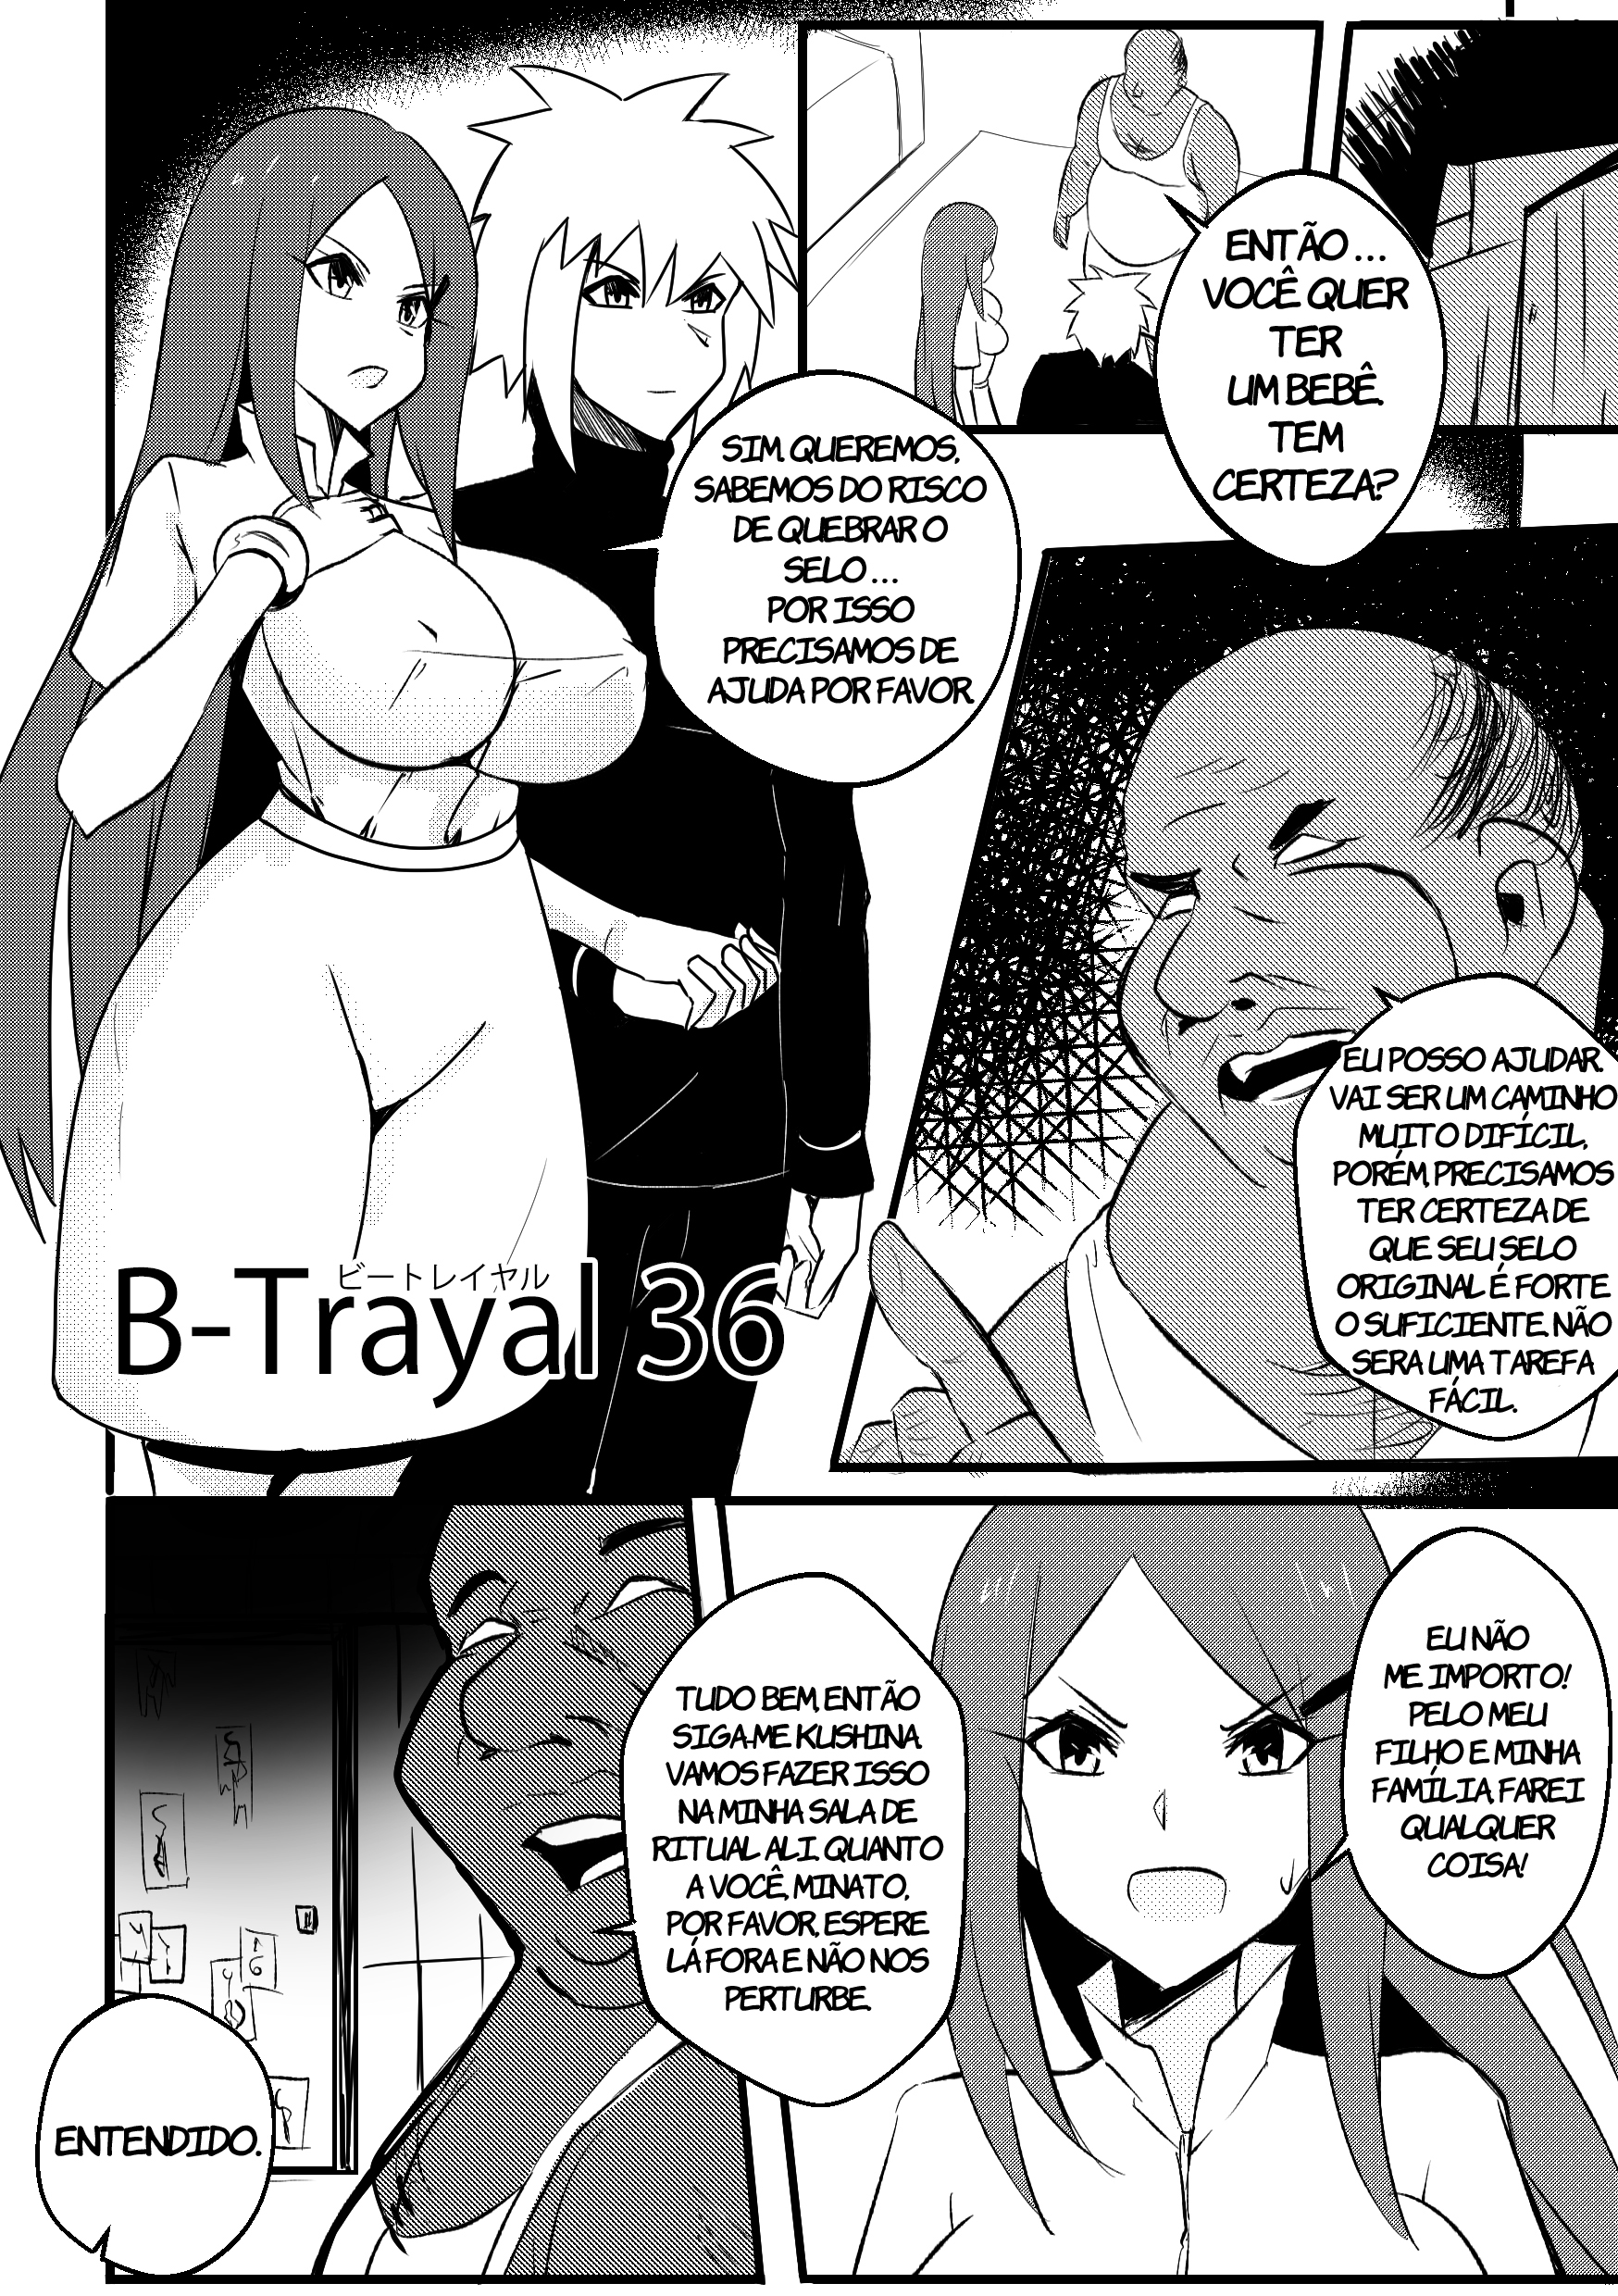 B-Trayal 36